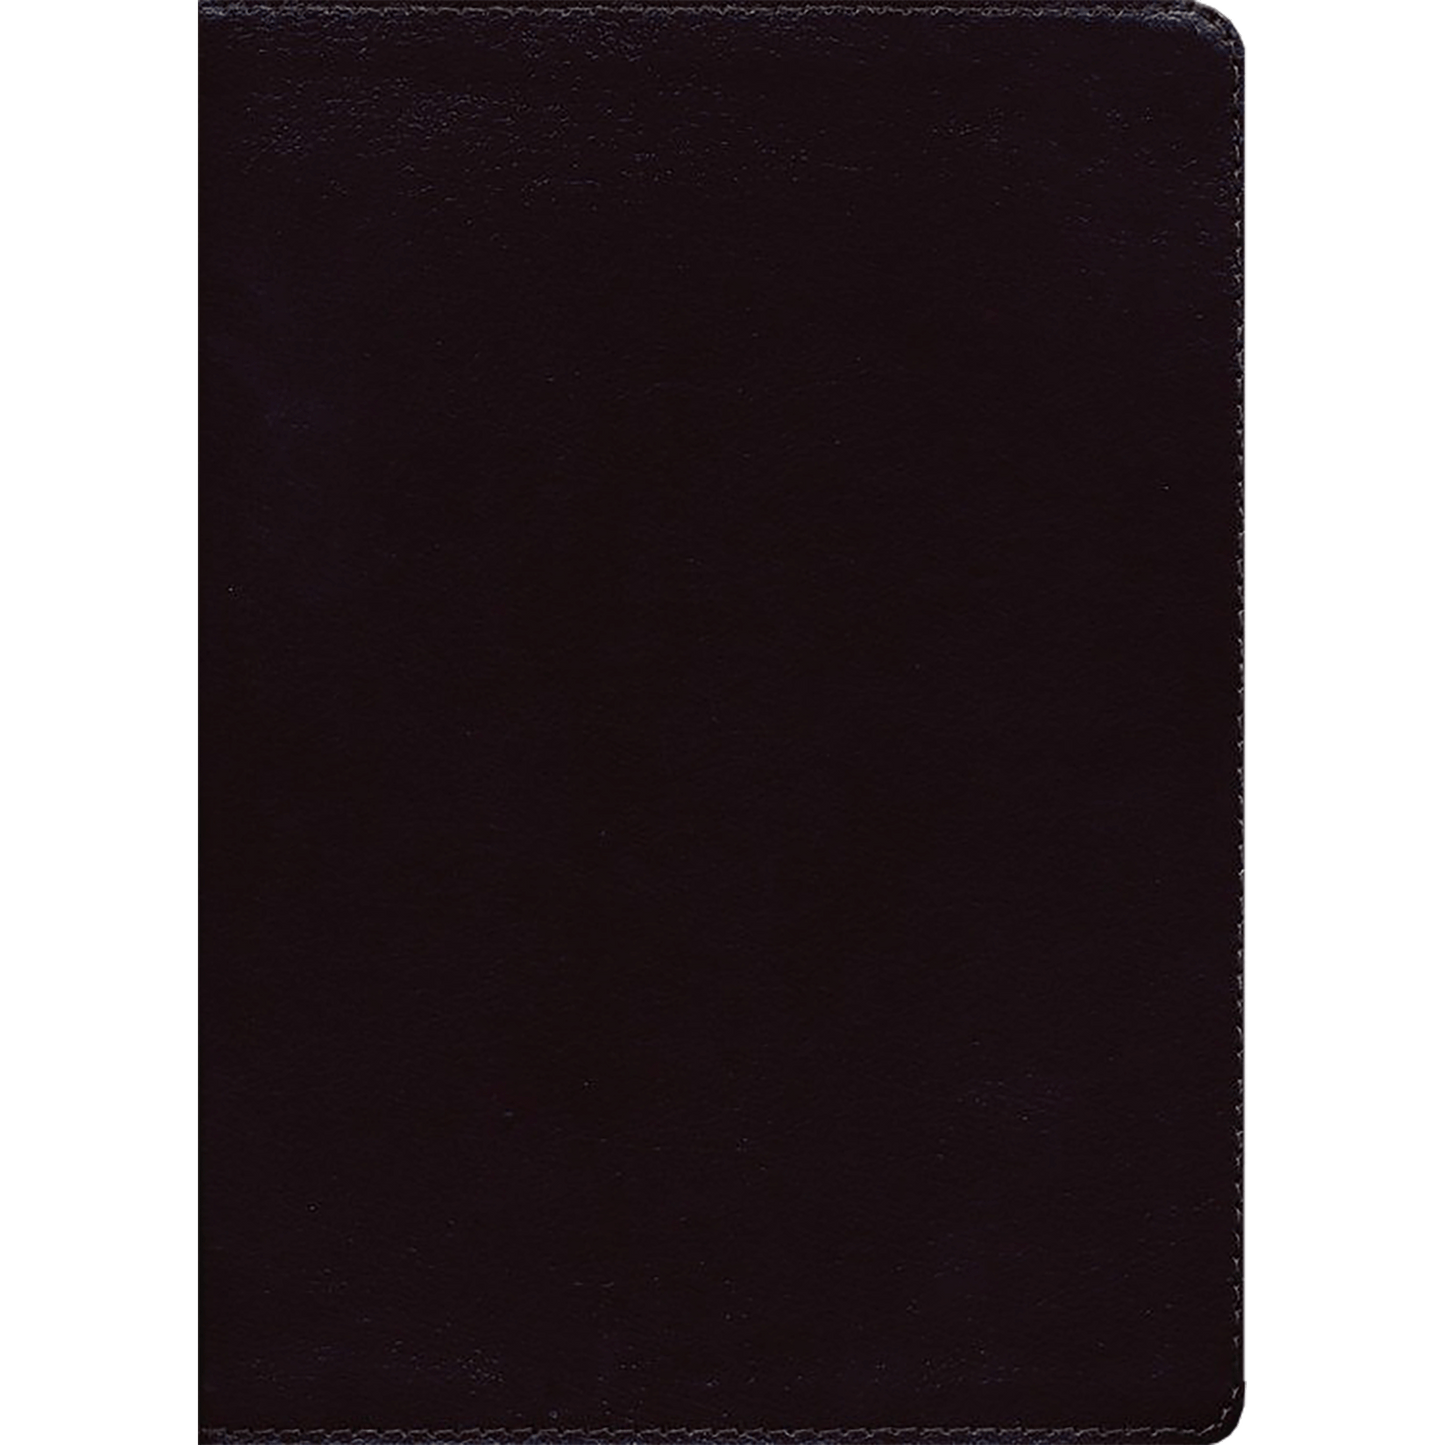 Berean Standard Bible - Black Bonded Leather